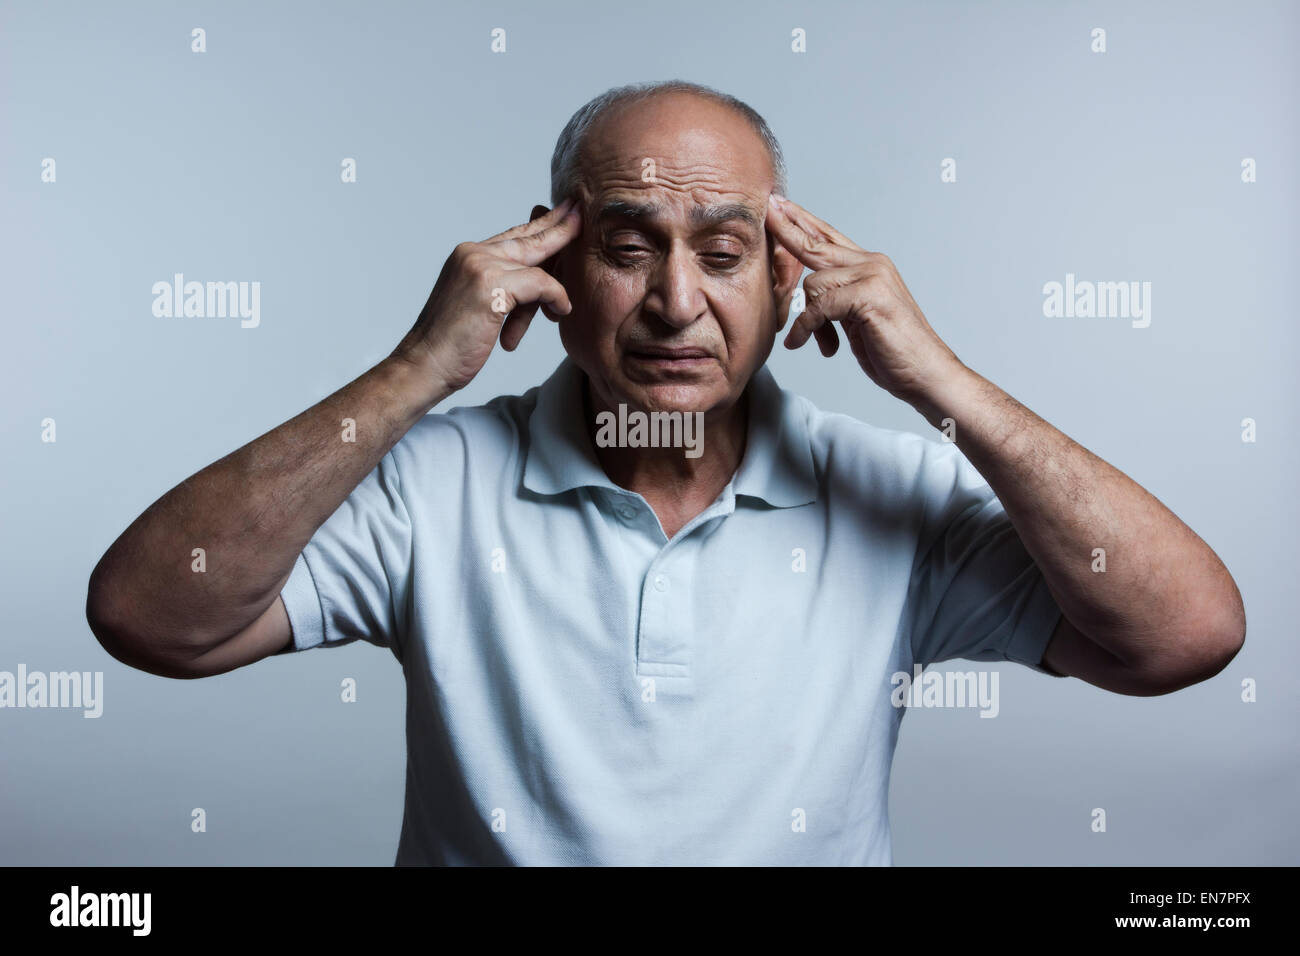 Old man with headache Stock Photo